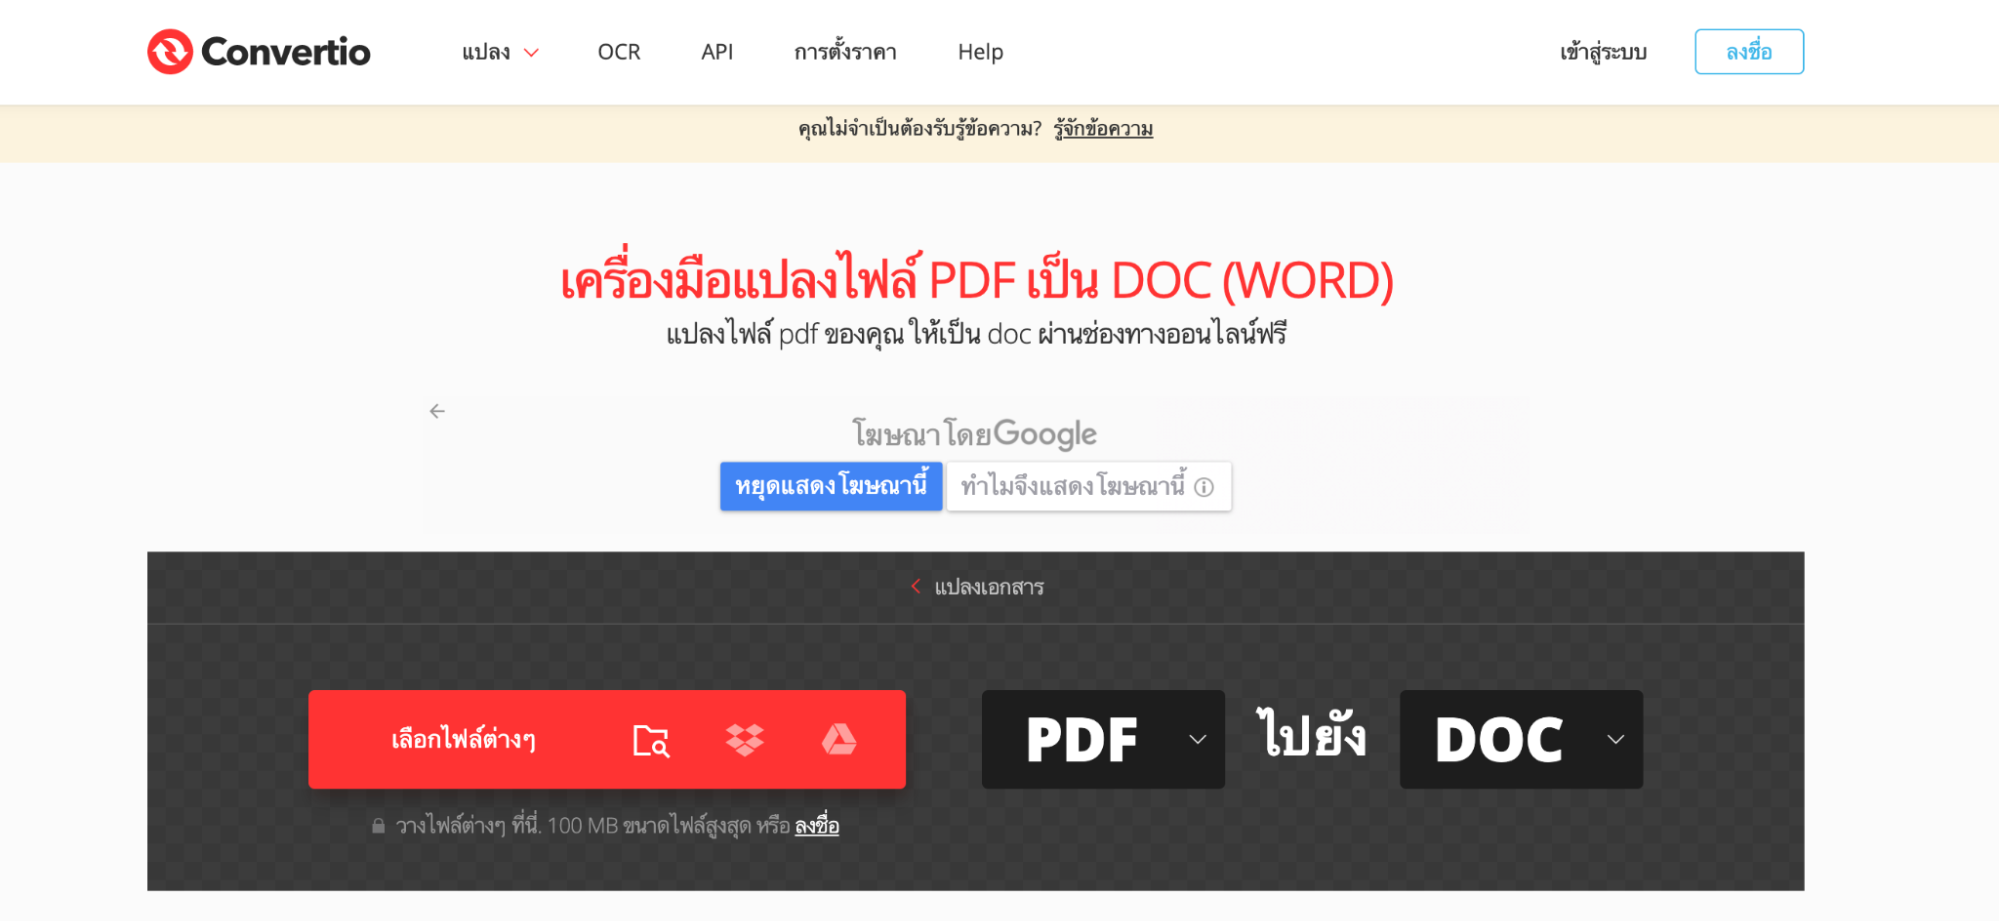 alt="แปลง PDF เป็น Word Convertio"